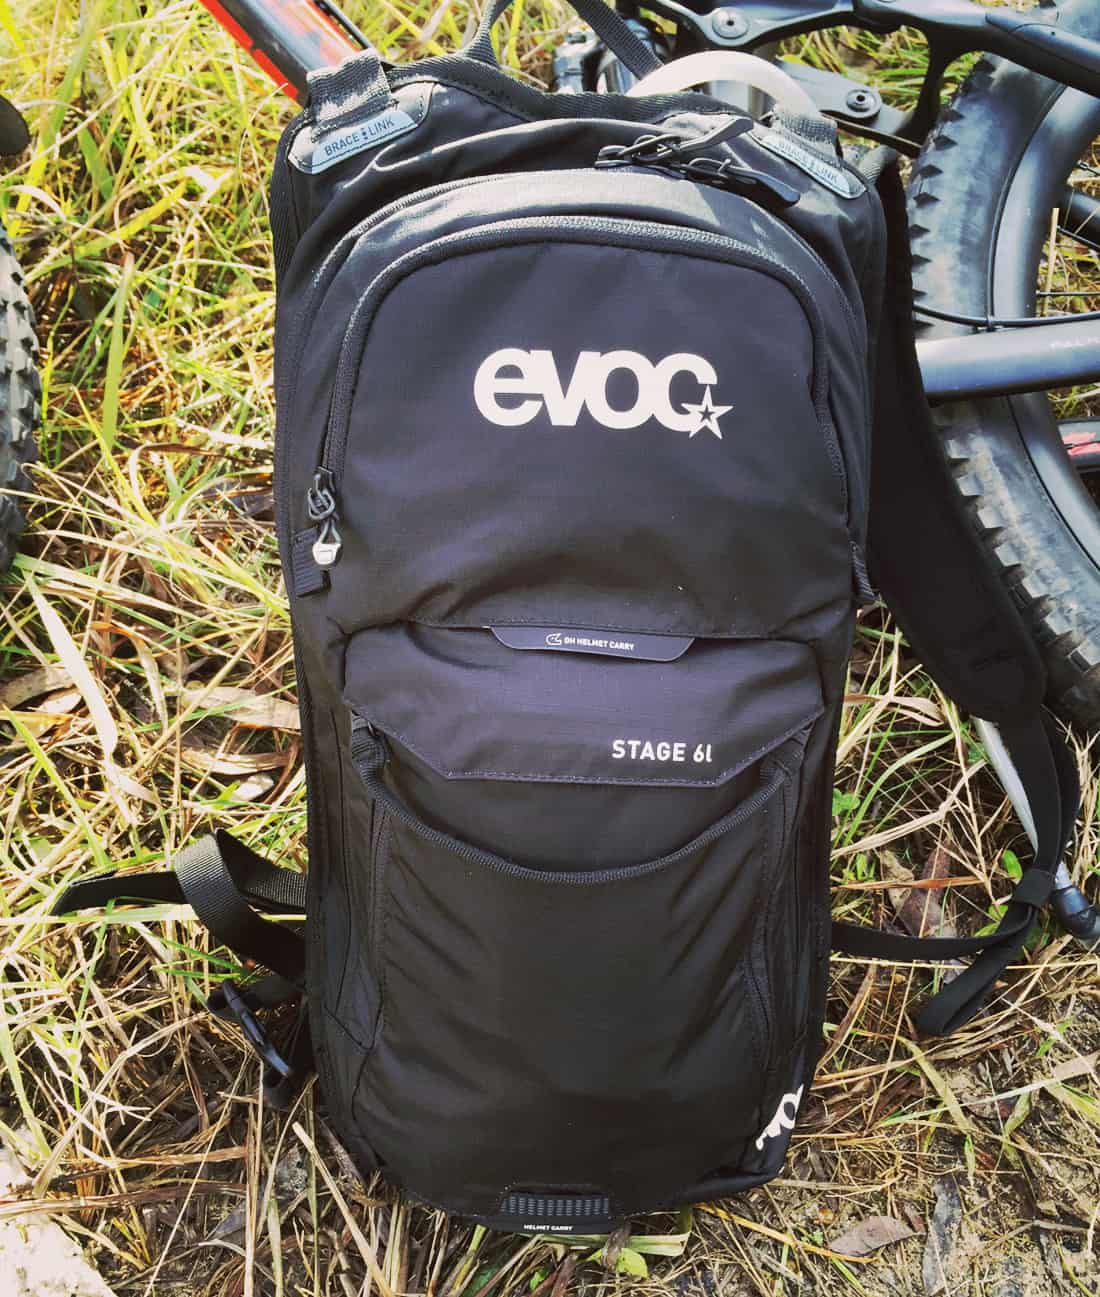 EVOC stage 6 pack